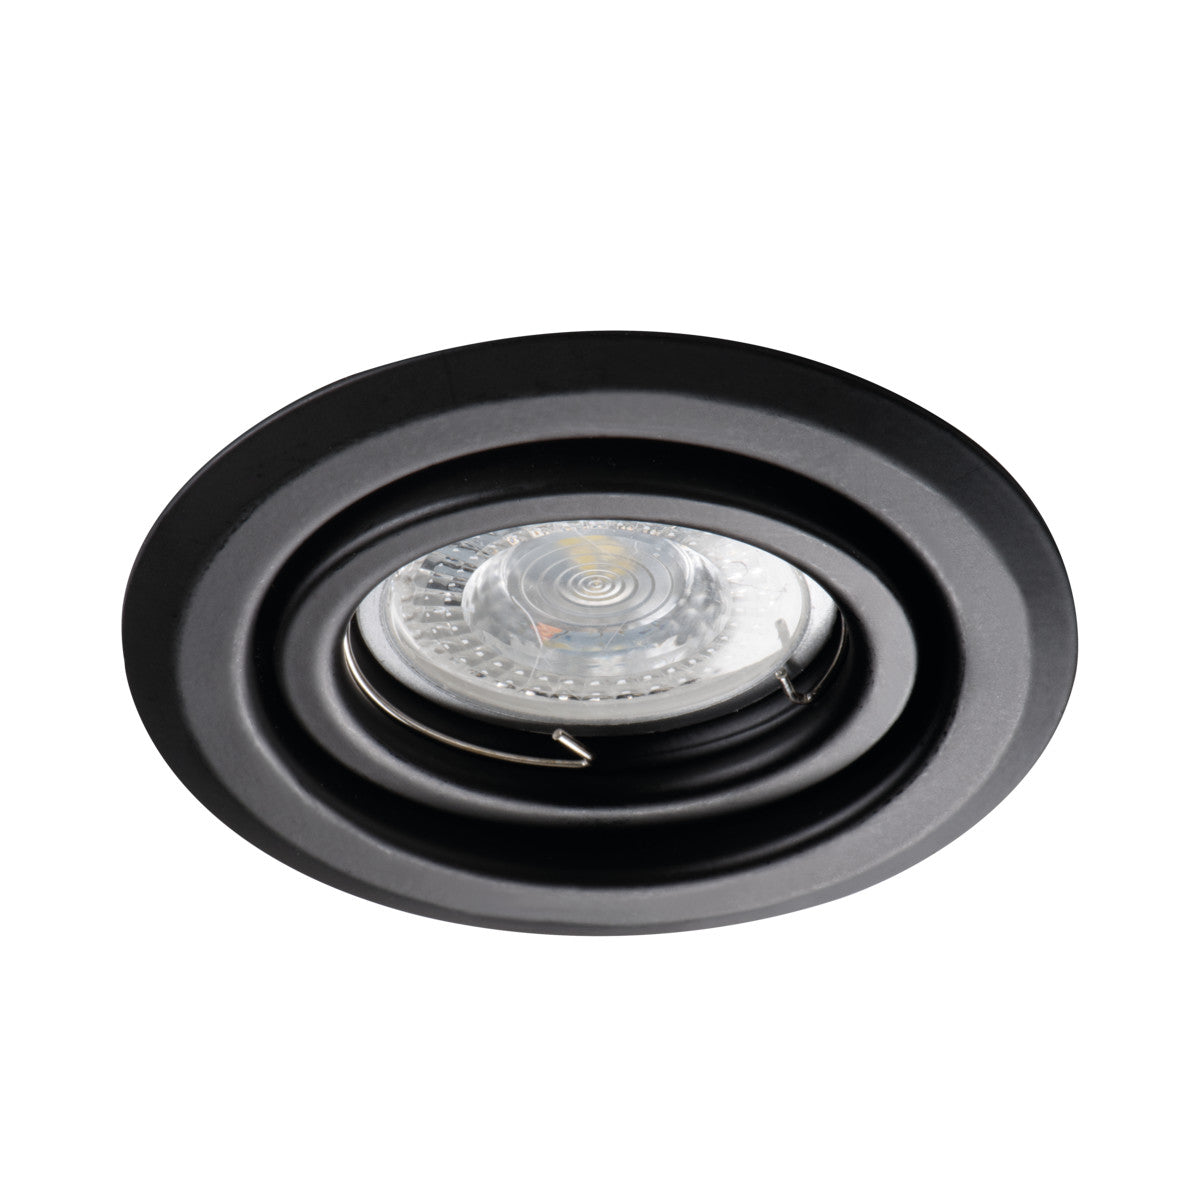 Kanlux ALOR Ceiling Recessed Mounted GU10 Spot Light - Fixed / Tilt - Round Square